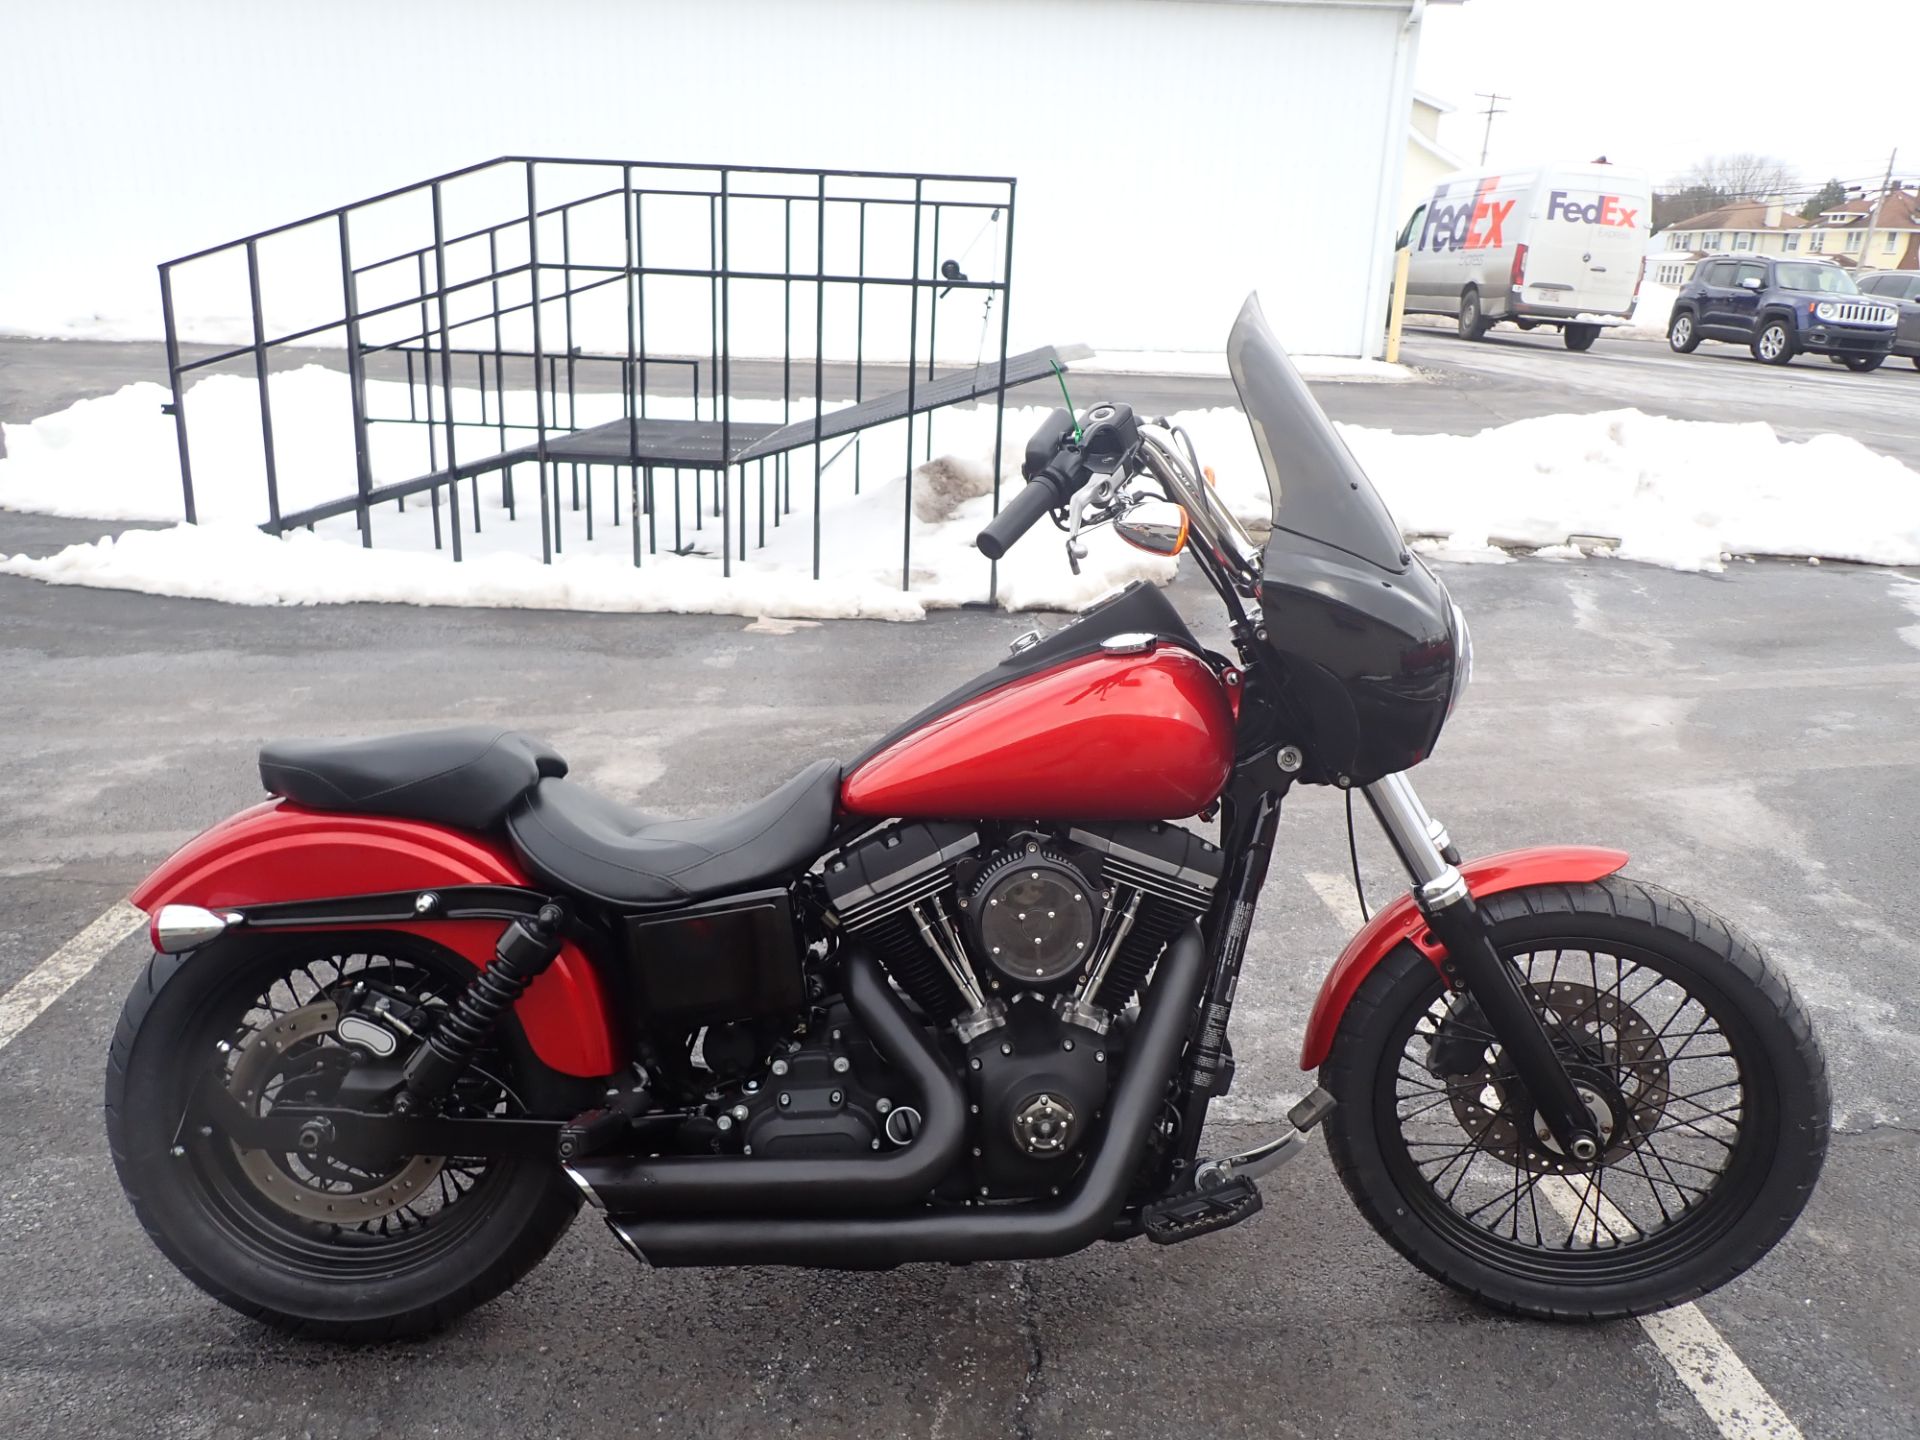 2013 Harley-Davidson Dyna® Street Bob® in Massillon, Ohio - Photo 1